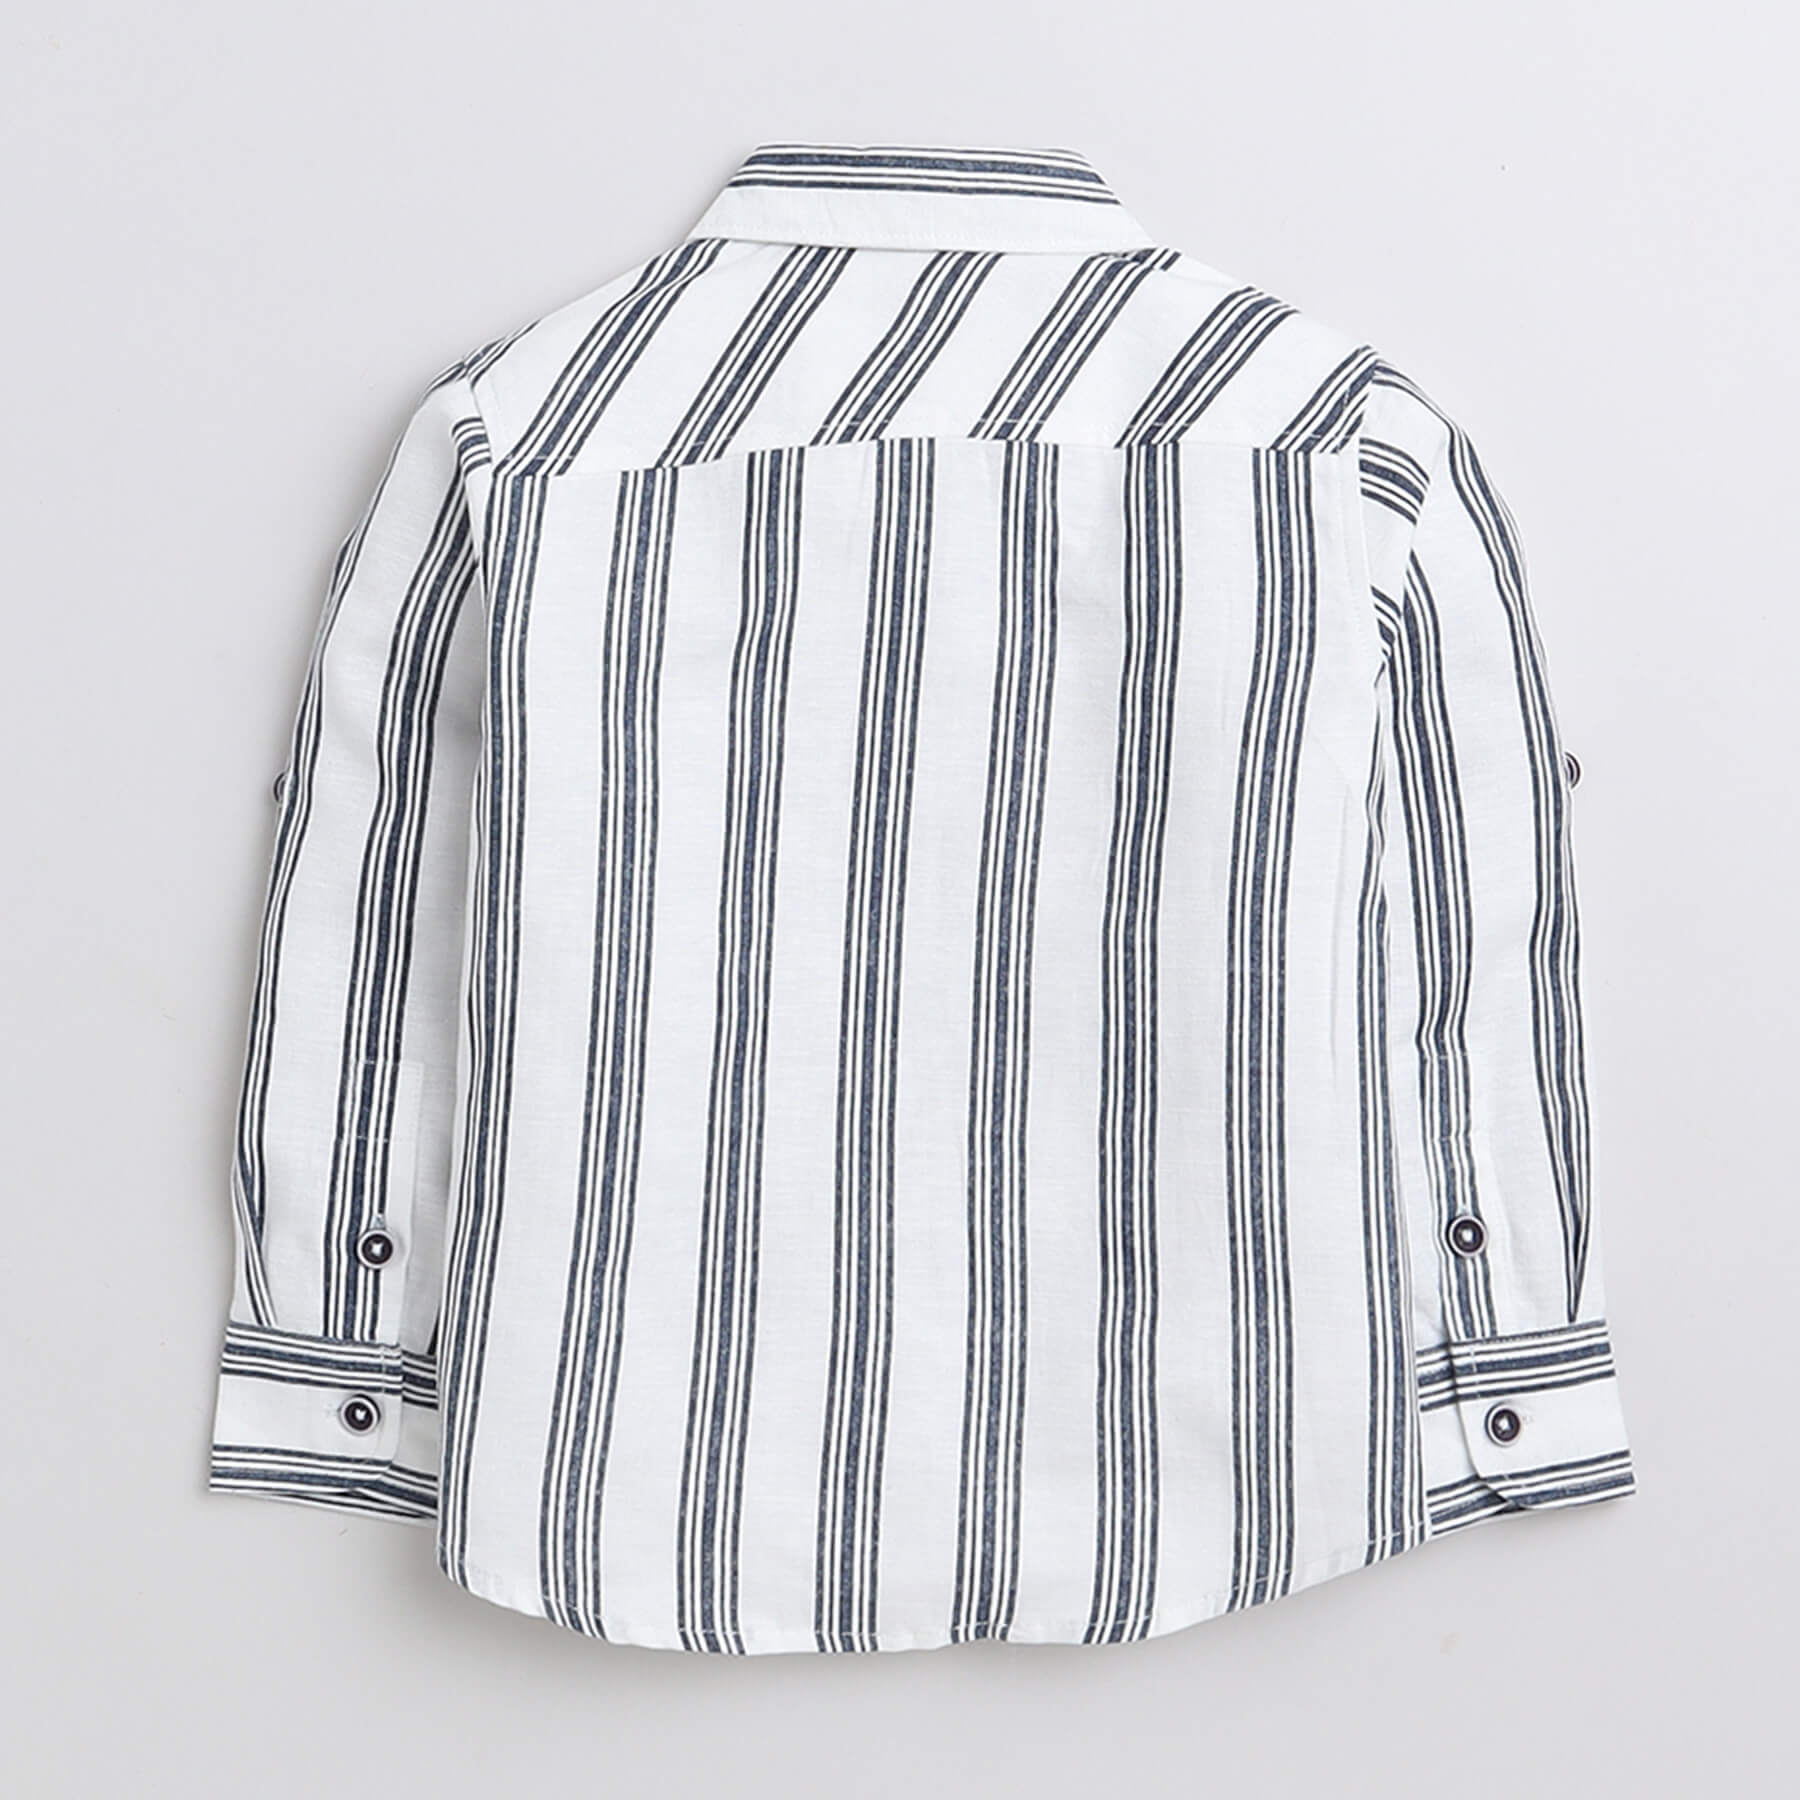 Taffykids stripes printed turn up full sleeves shirt - White/Blue